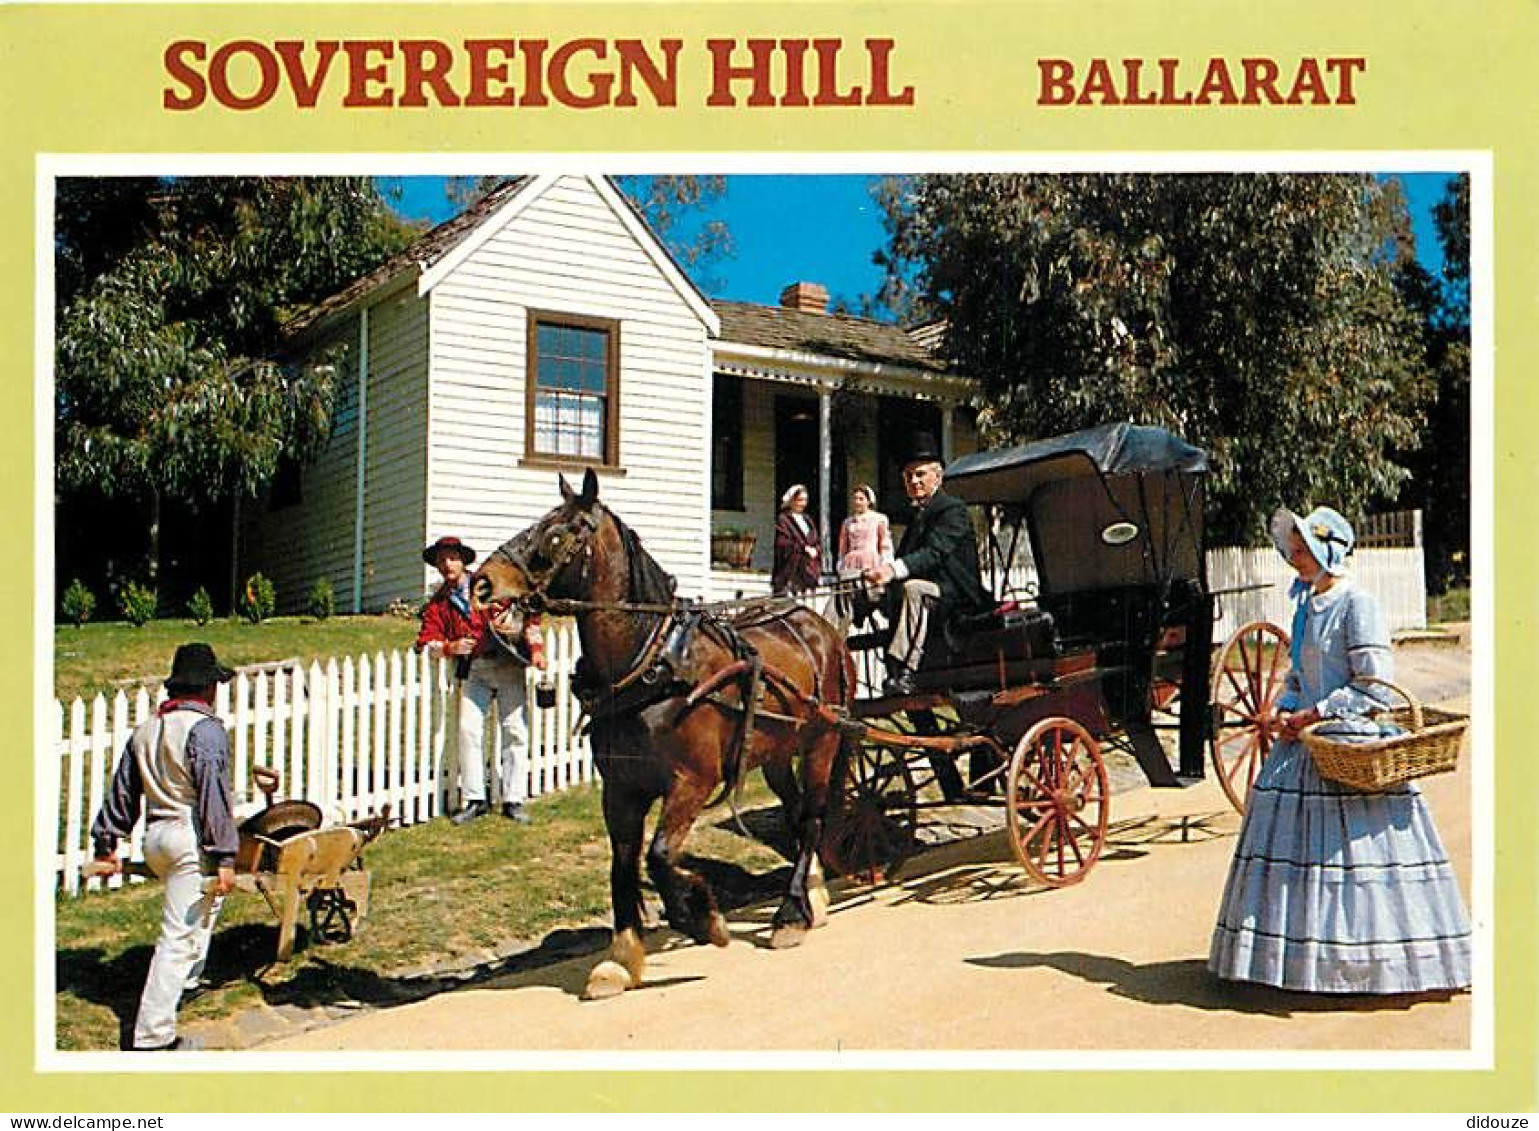 Australie - Australia - Ballarat - Sovereign Hill Goldmining Township - Passing Linton Cottage - SOVEREIGN HILL GOLDMINI - Ballarat